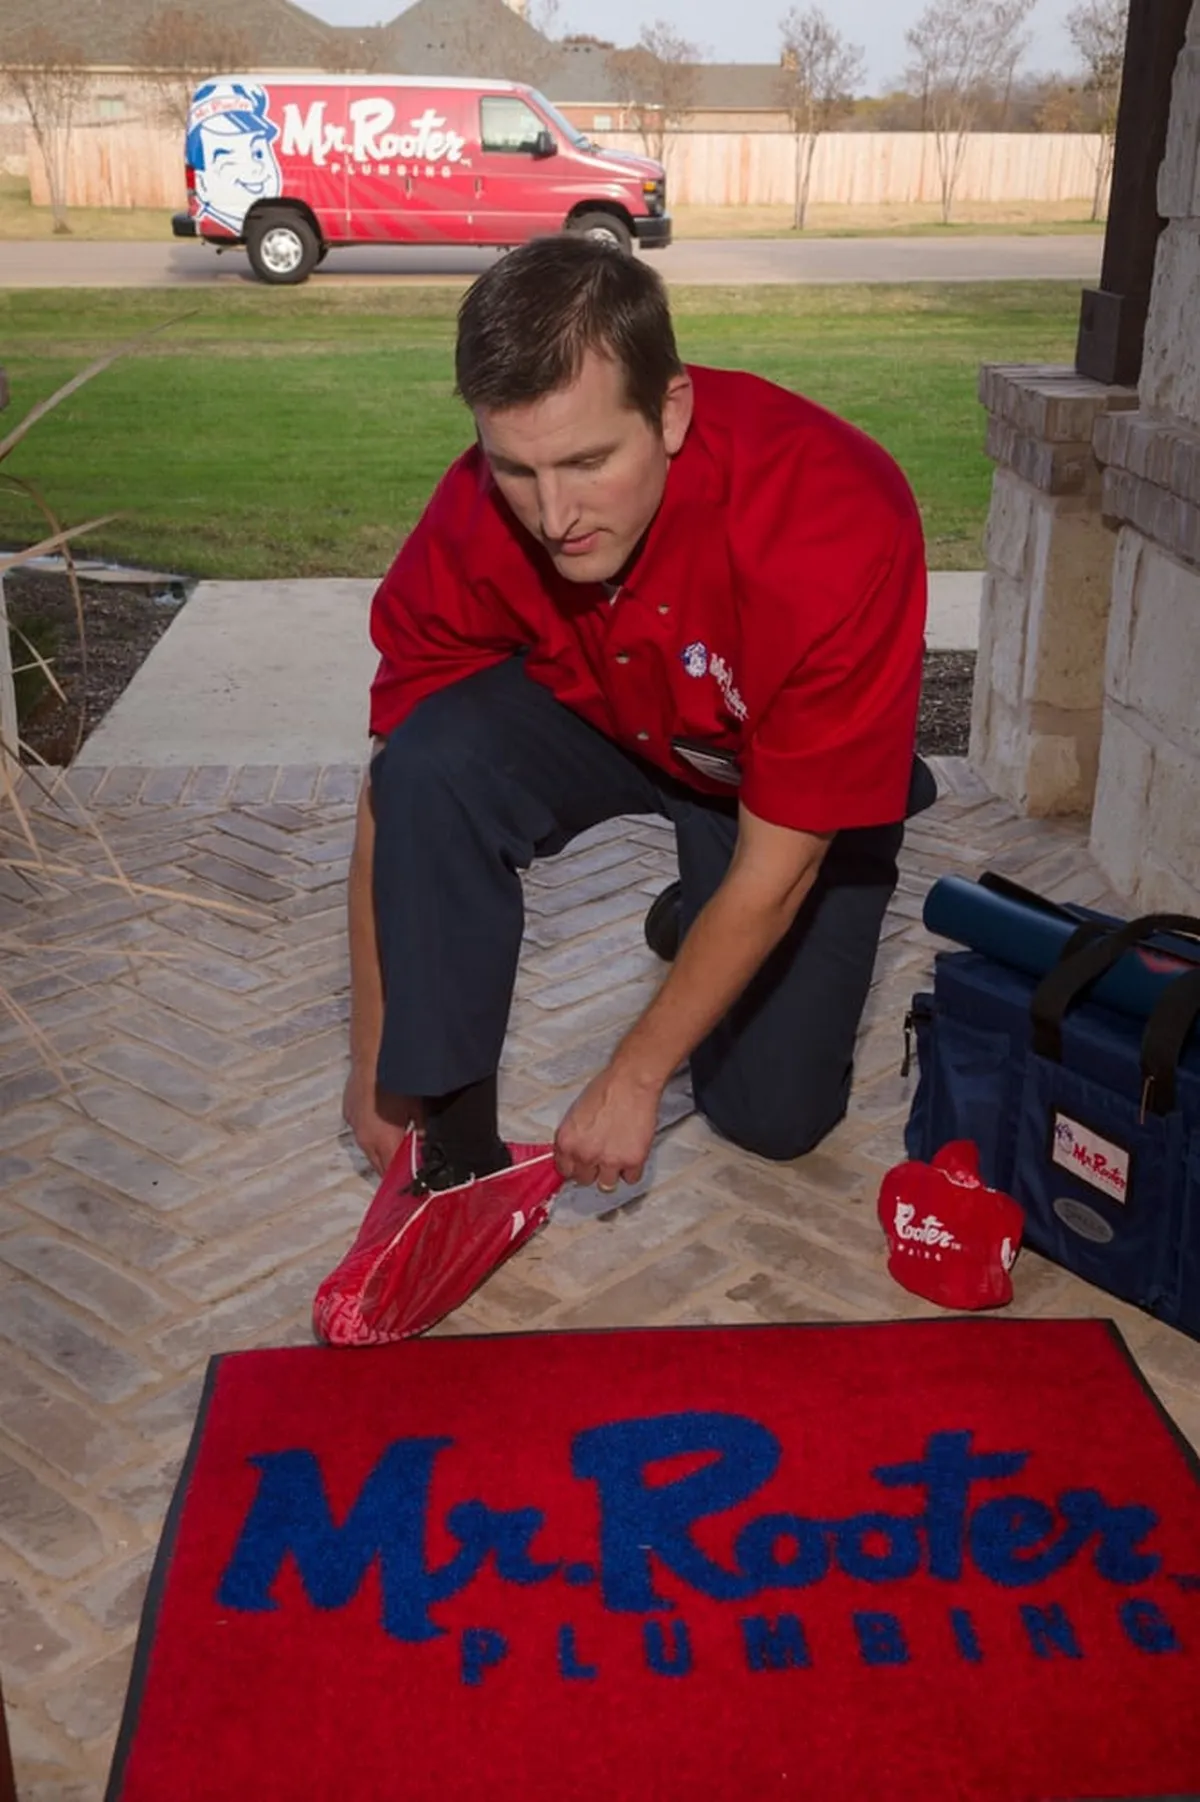  Mr. Rooter Plumbing technician preparing shoes for plumbing emergency in Calgary home